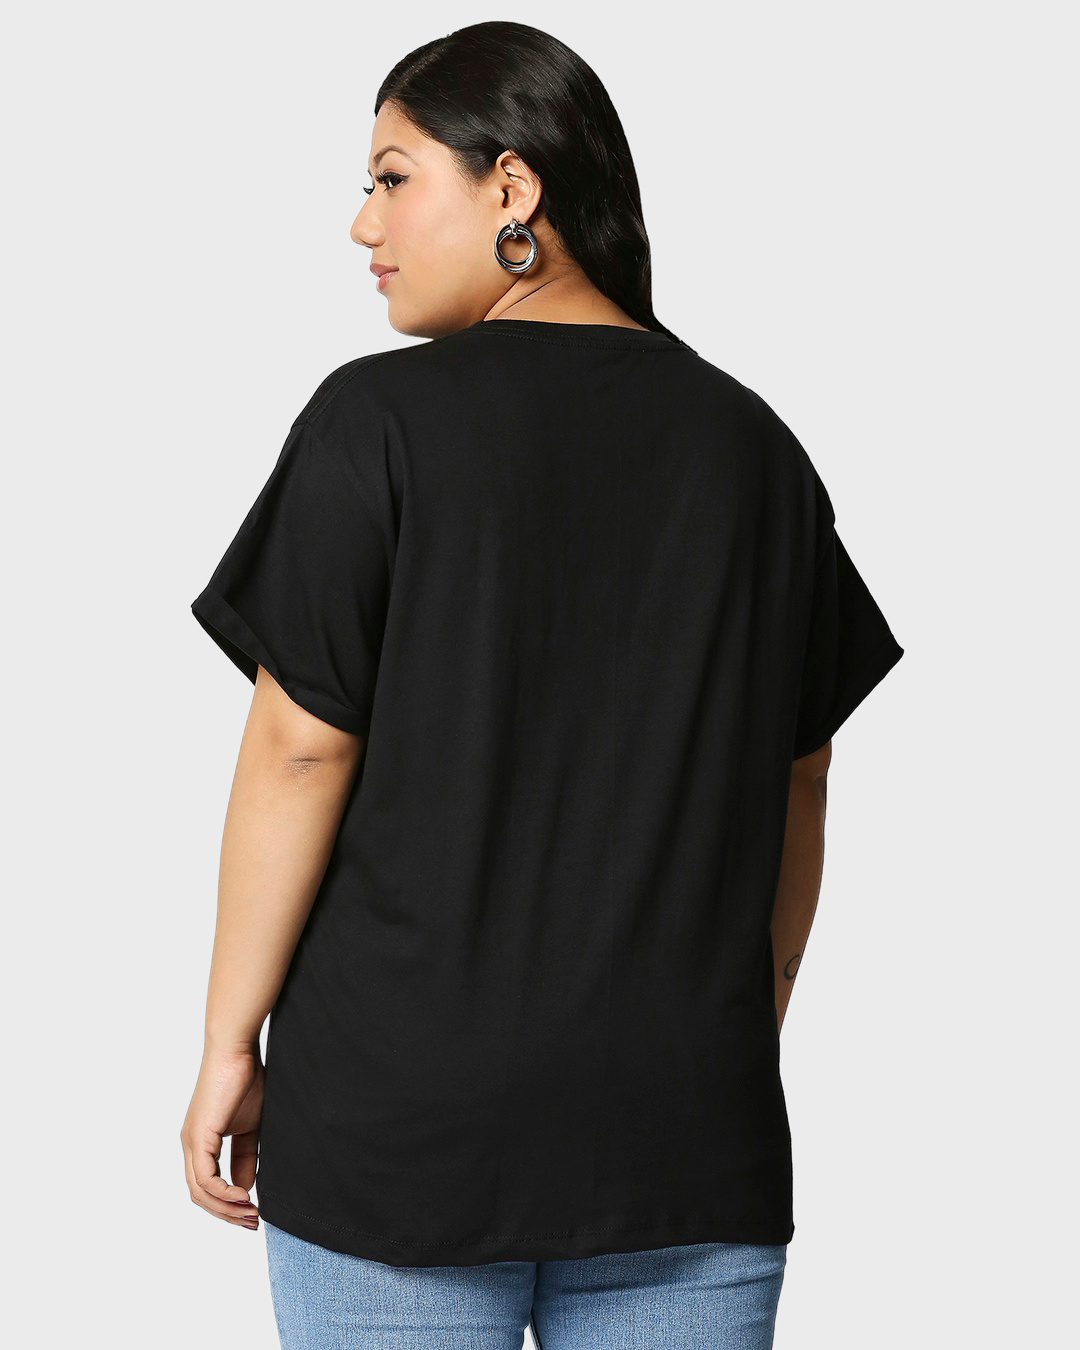 Shop Women's Black Chibi Friends Graphic Printed Plus Size Boyfriend T- shirt-Back